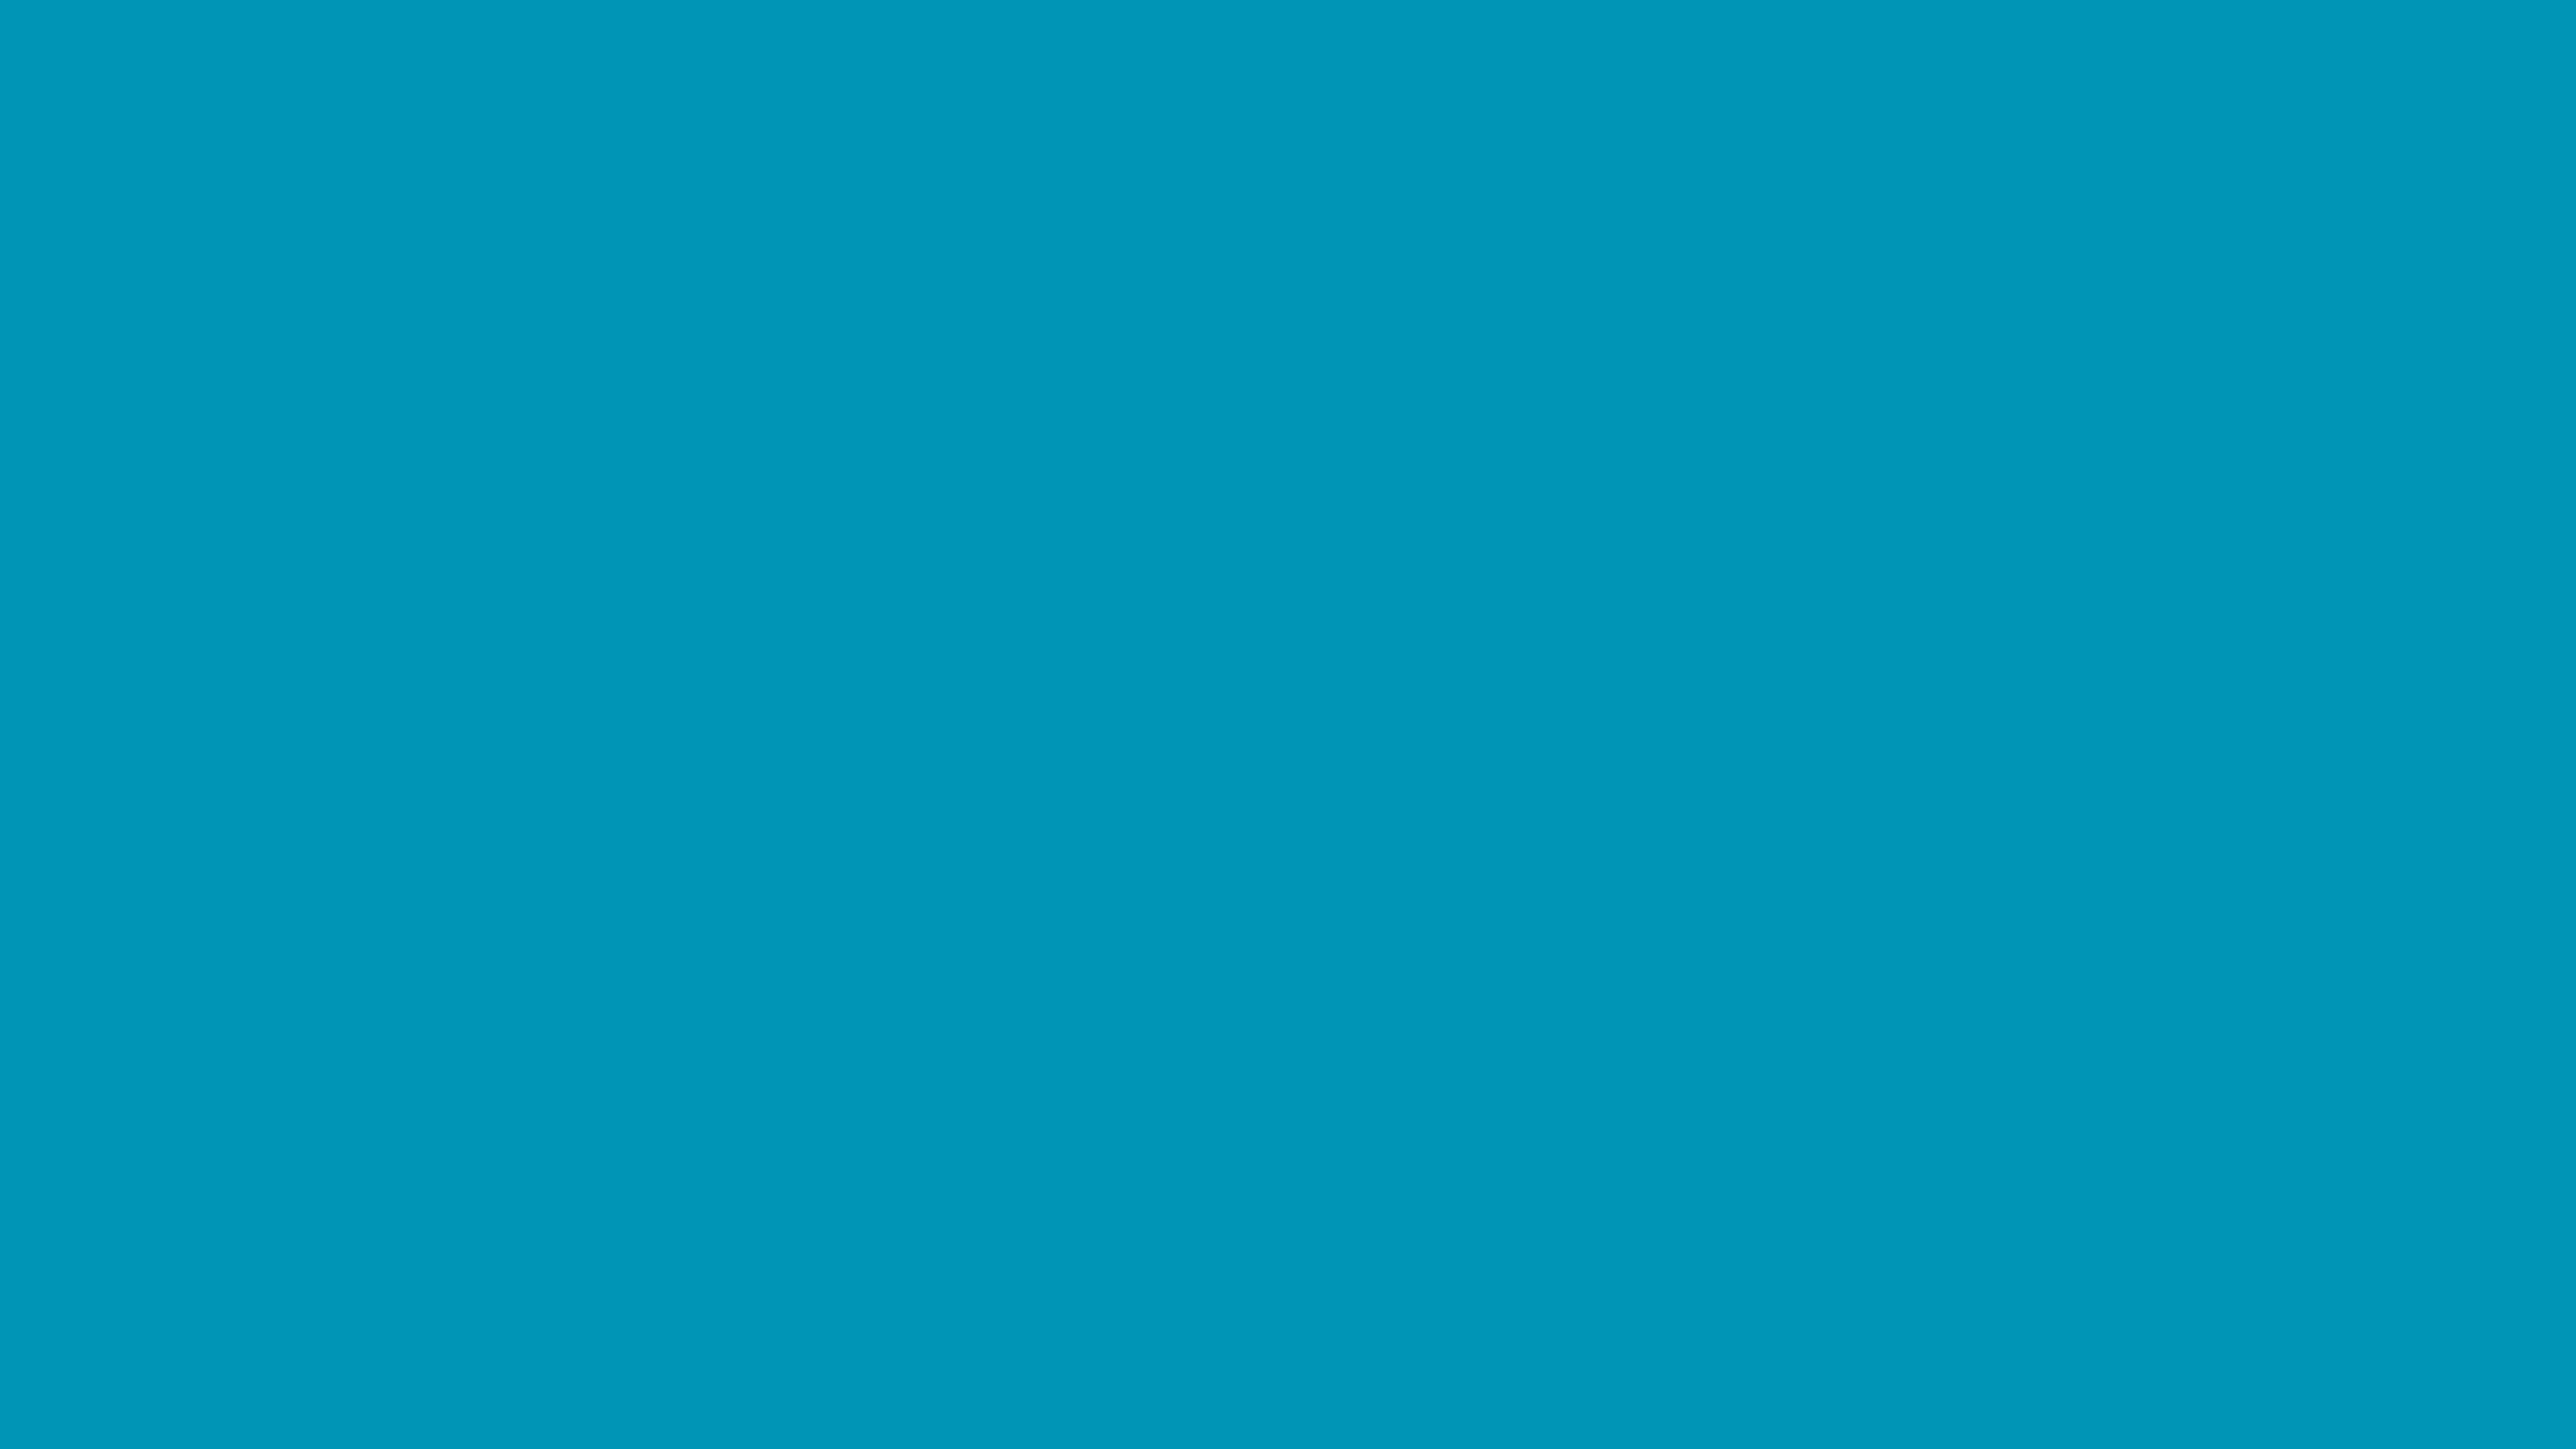 4096x2304 Bondi Blue Solid Color Background